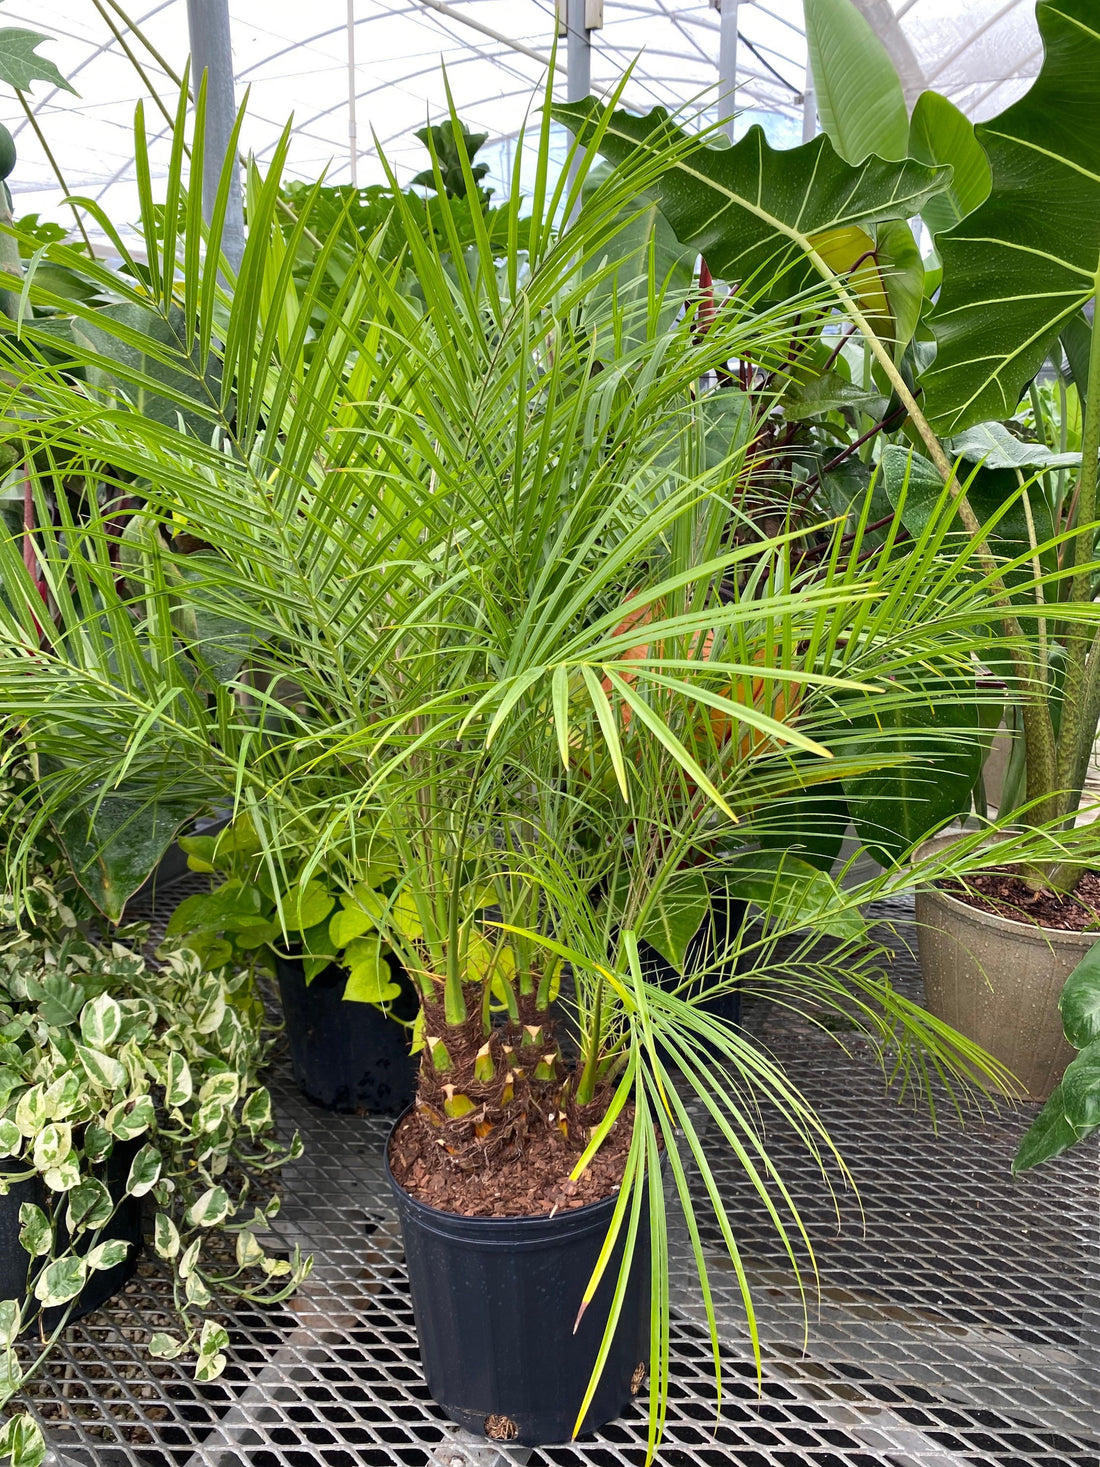 Date Palm Tree, Phoenix Roebelinii Pygmy Tropical Palm